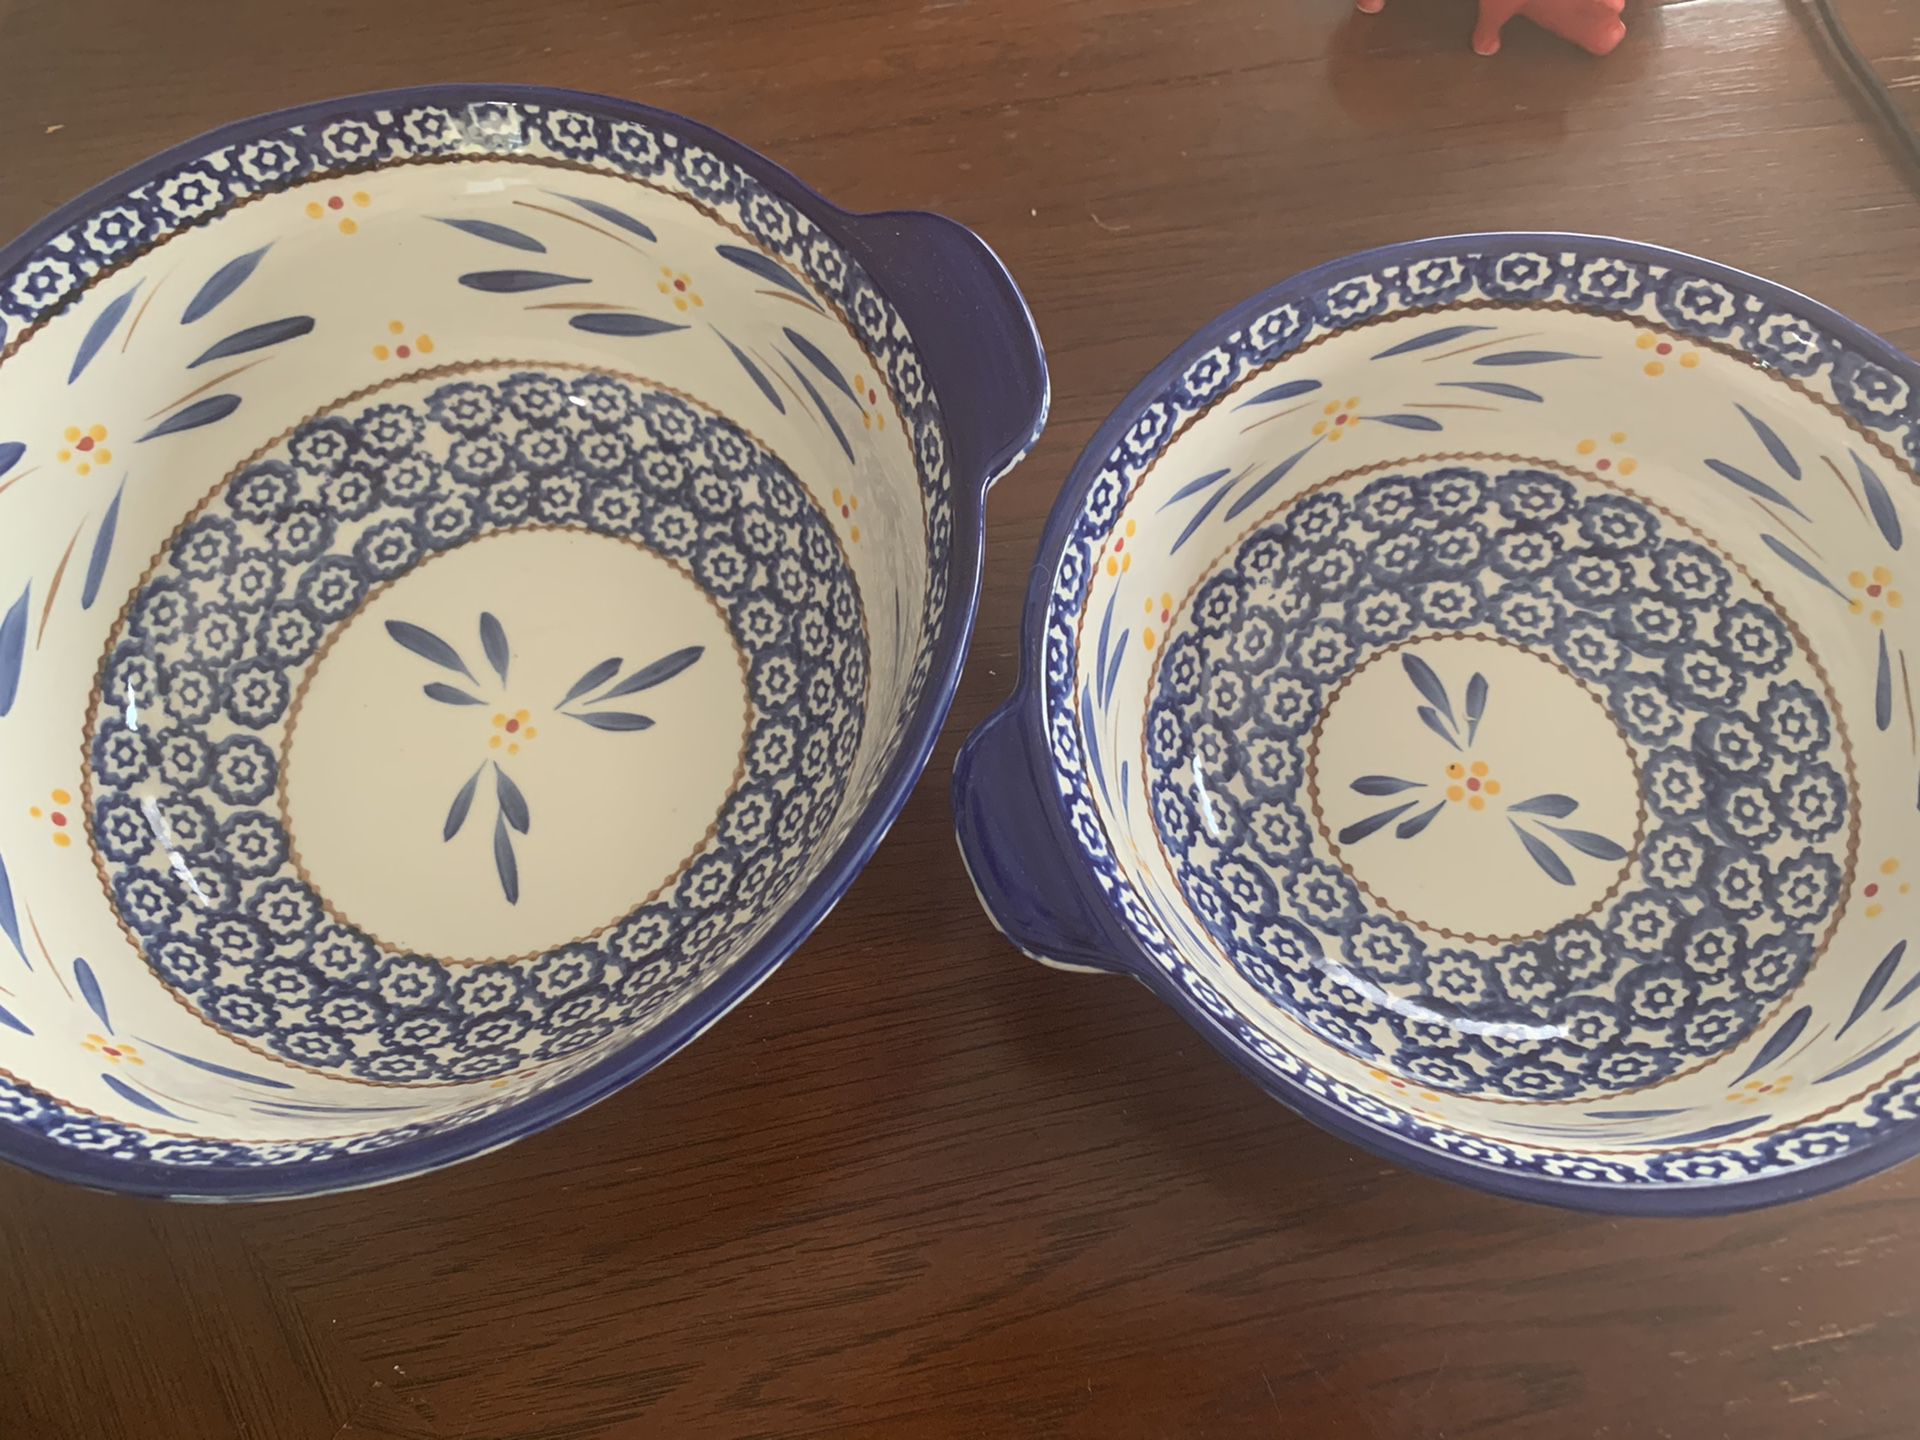 Temp-tations bowls